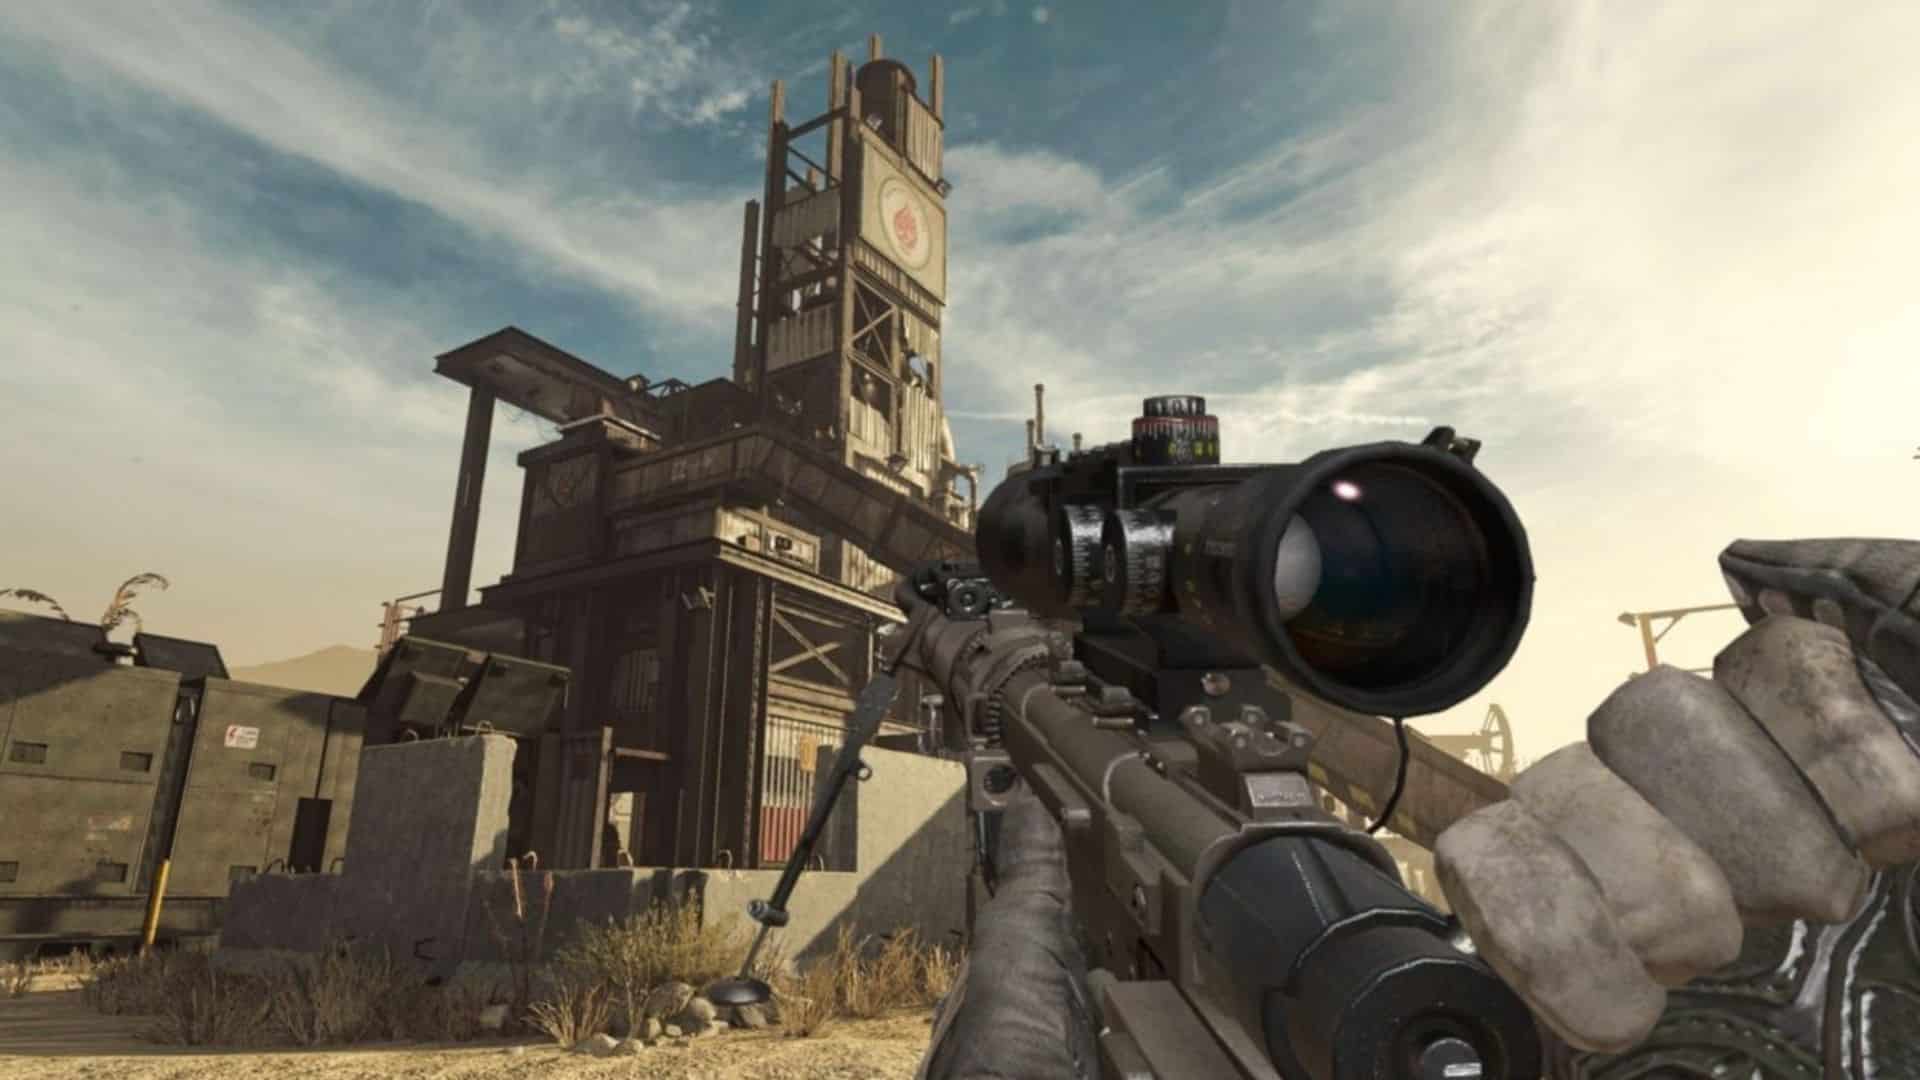 player using an intervention sniper rifle in modern warfare 2